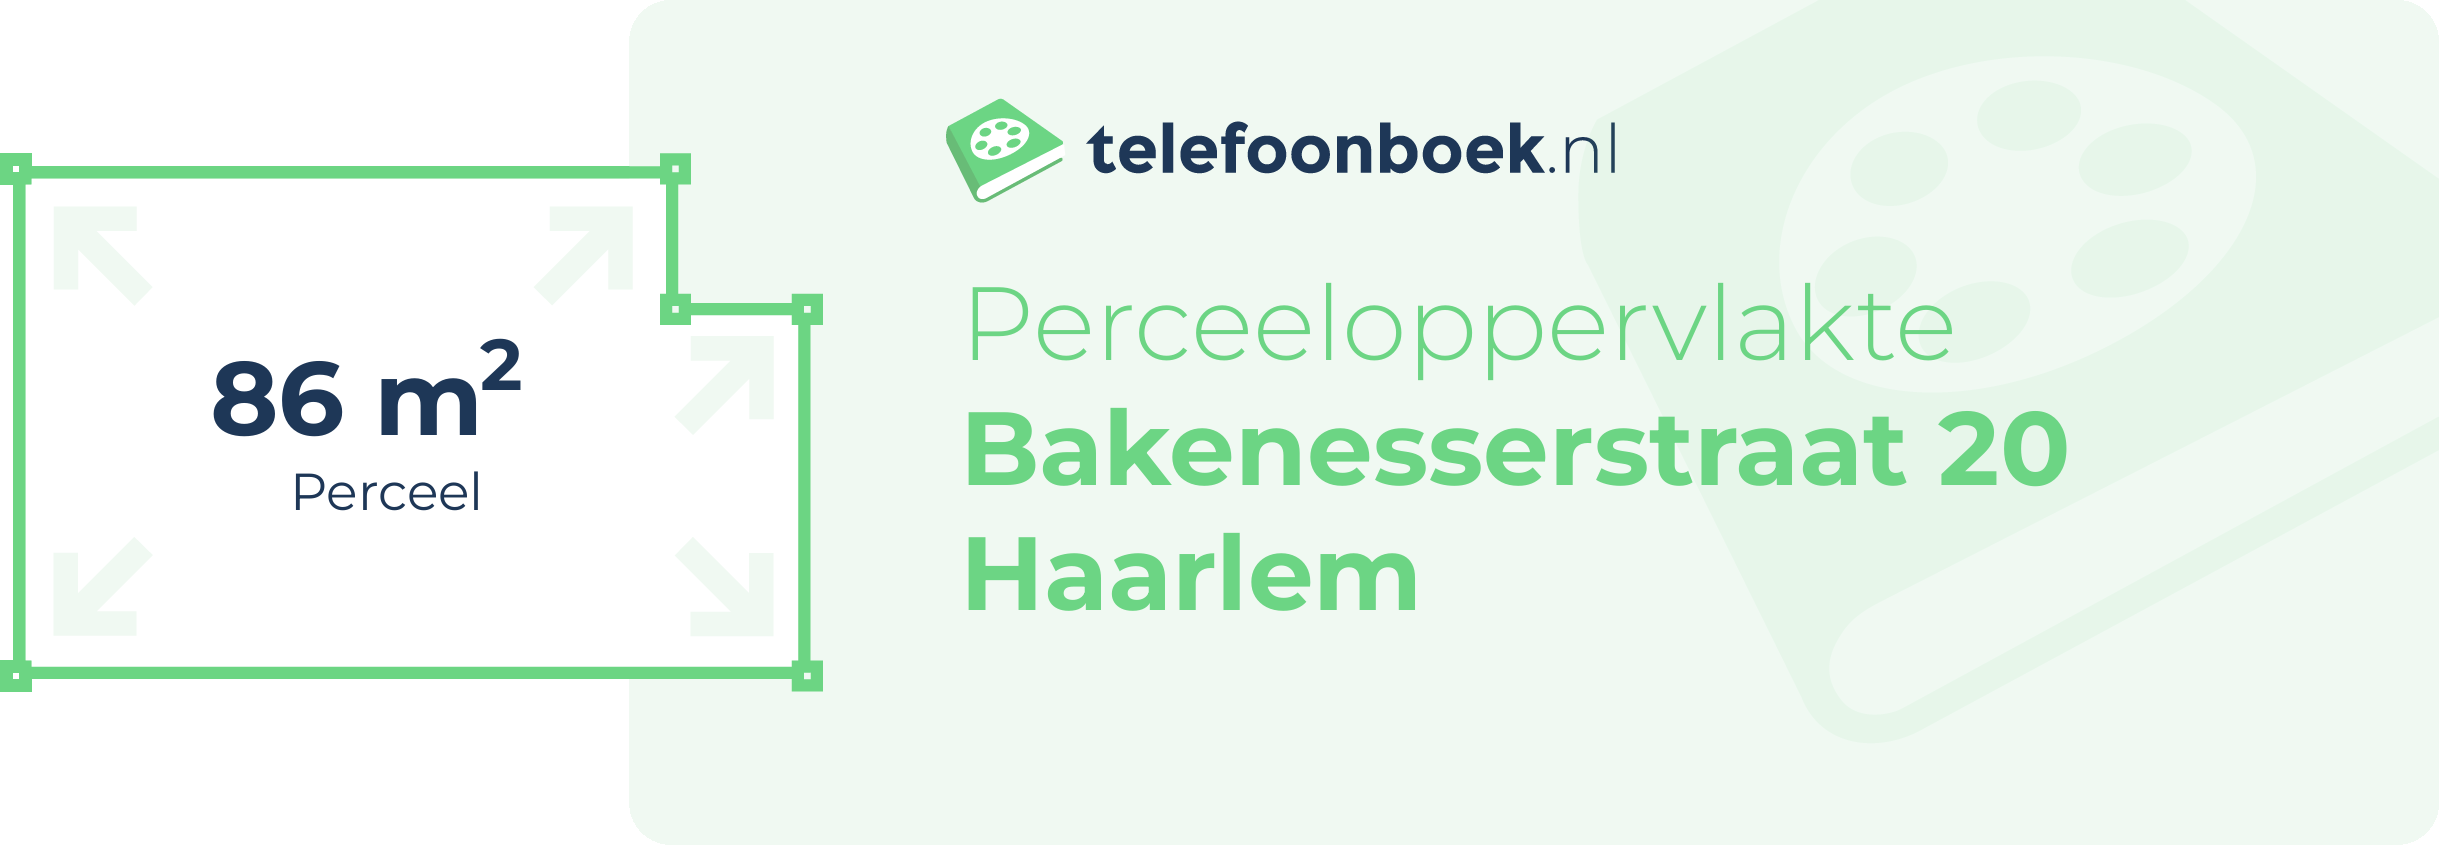 Perceeloppervlakte Bakenesserstraat 20 Haarlem